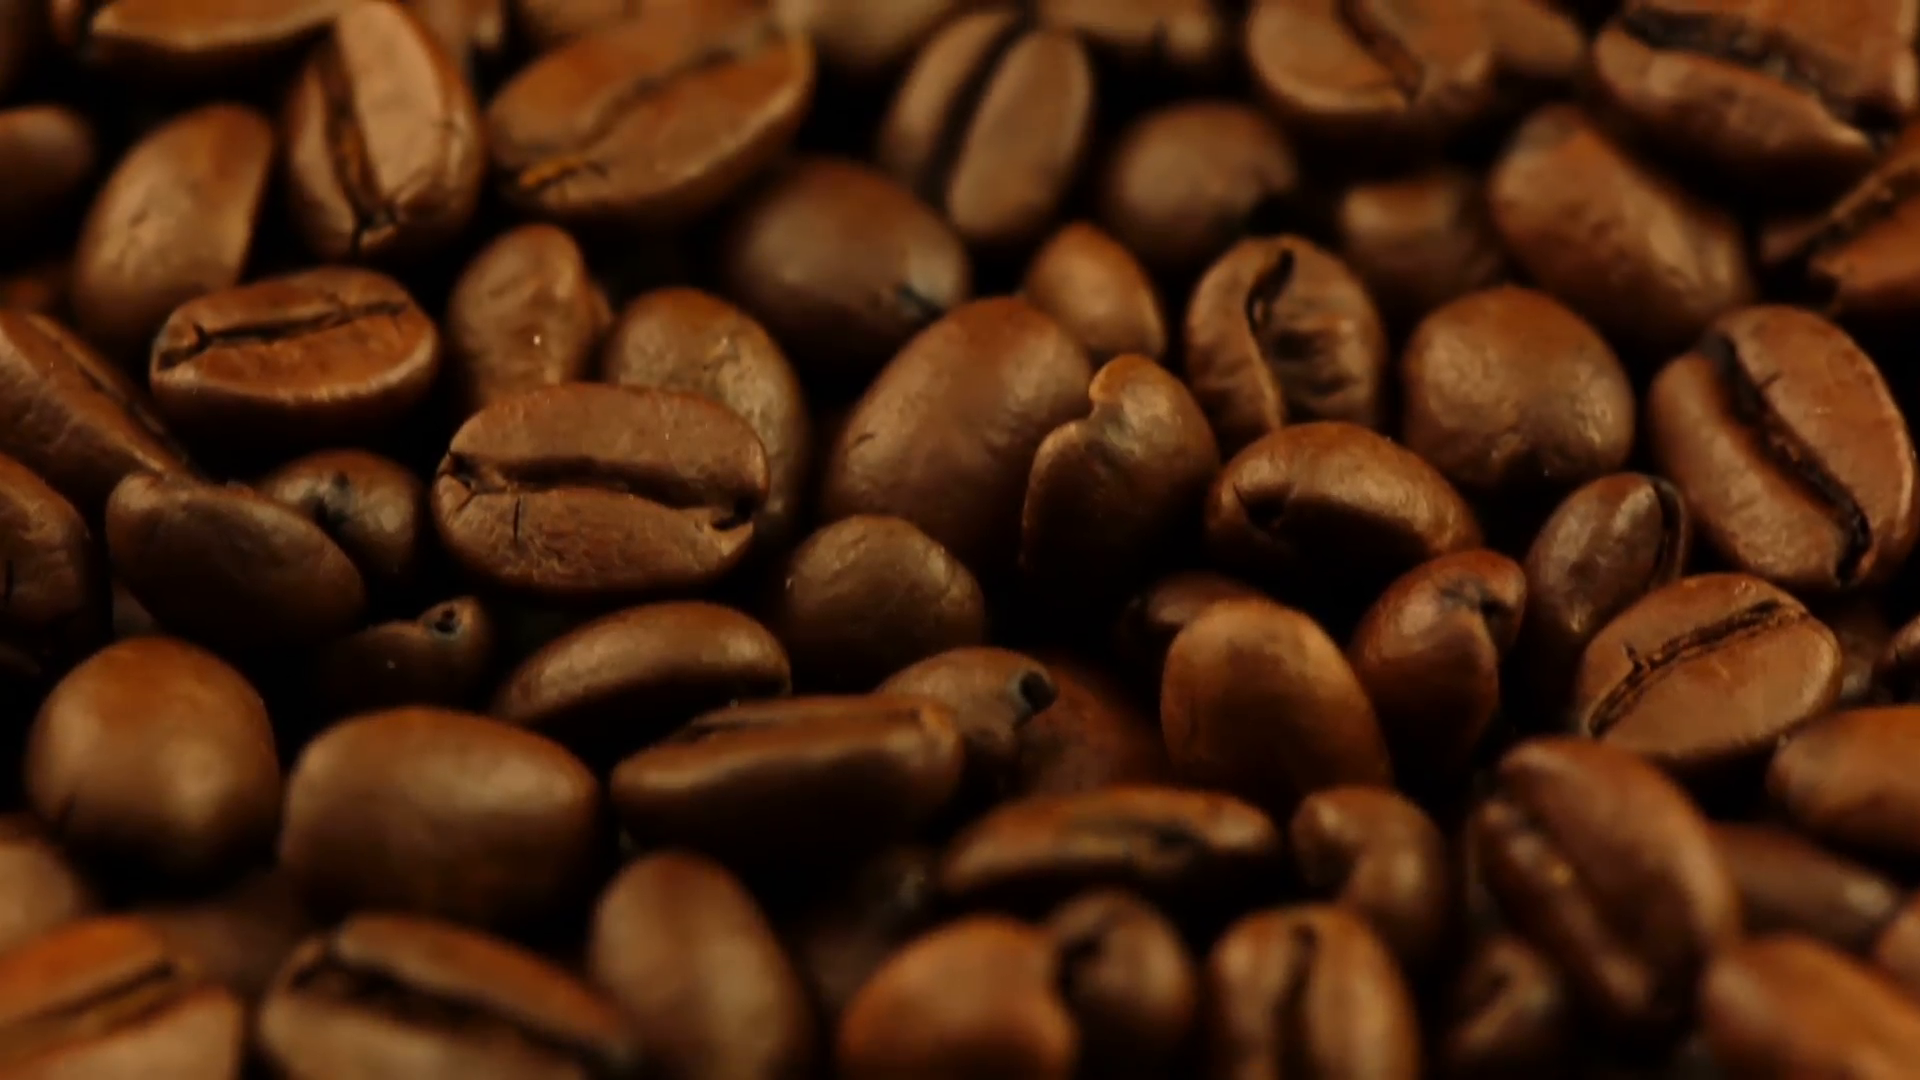 Roasted Coffee Grain Closeup Stock Video Footage - VideoBlocks